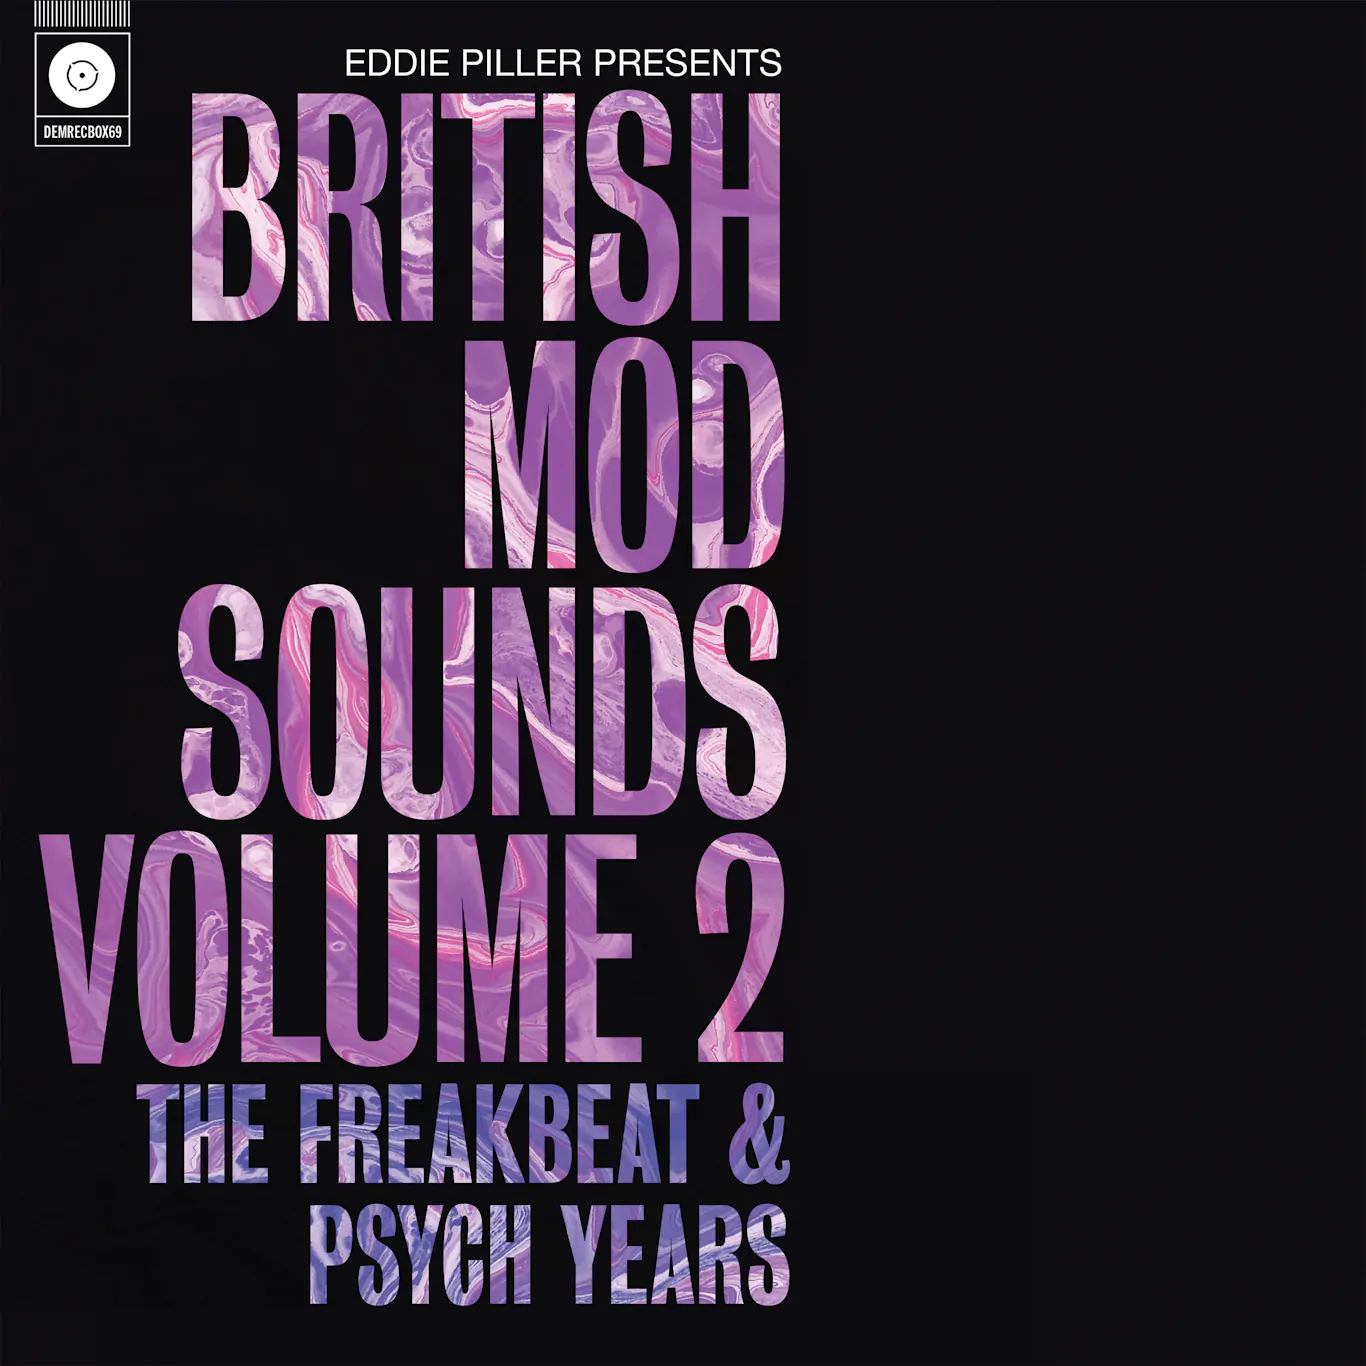 Eddie Piller presents British Mod Sounds Volume 2: The Freakbeat & Psych Years